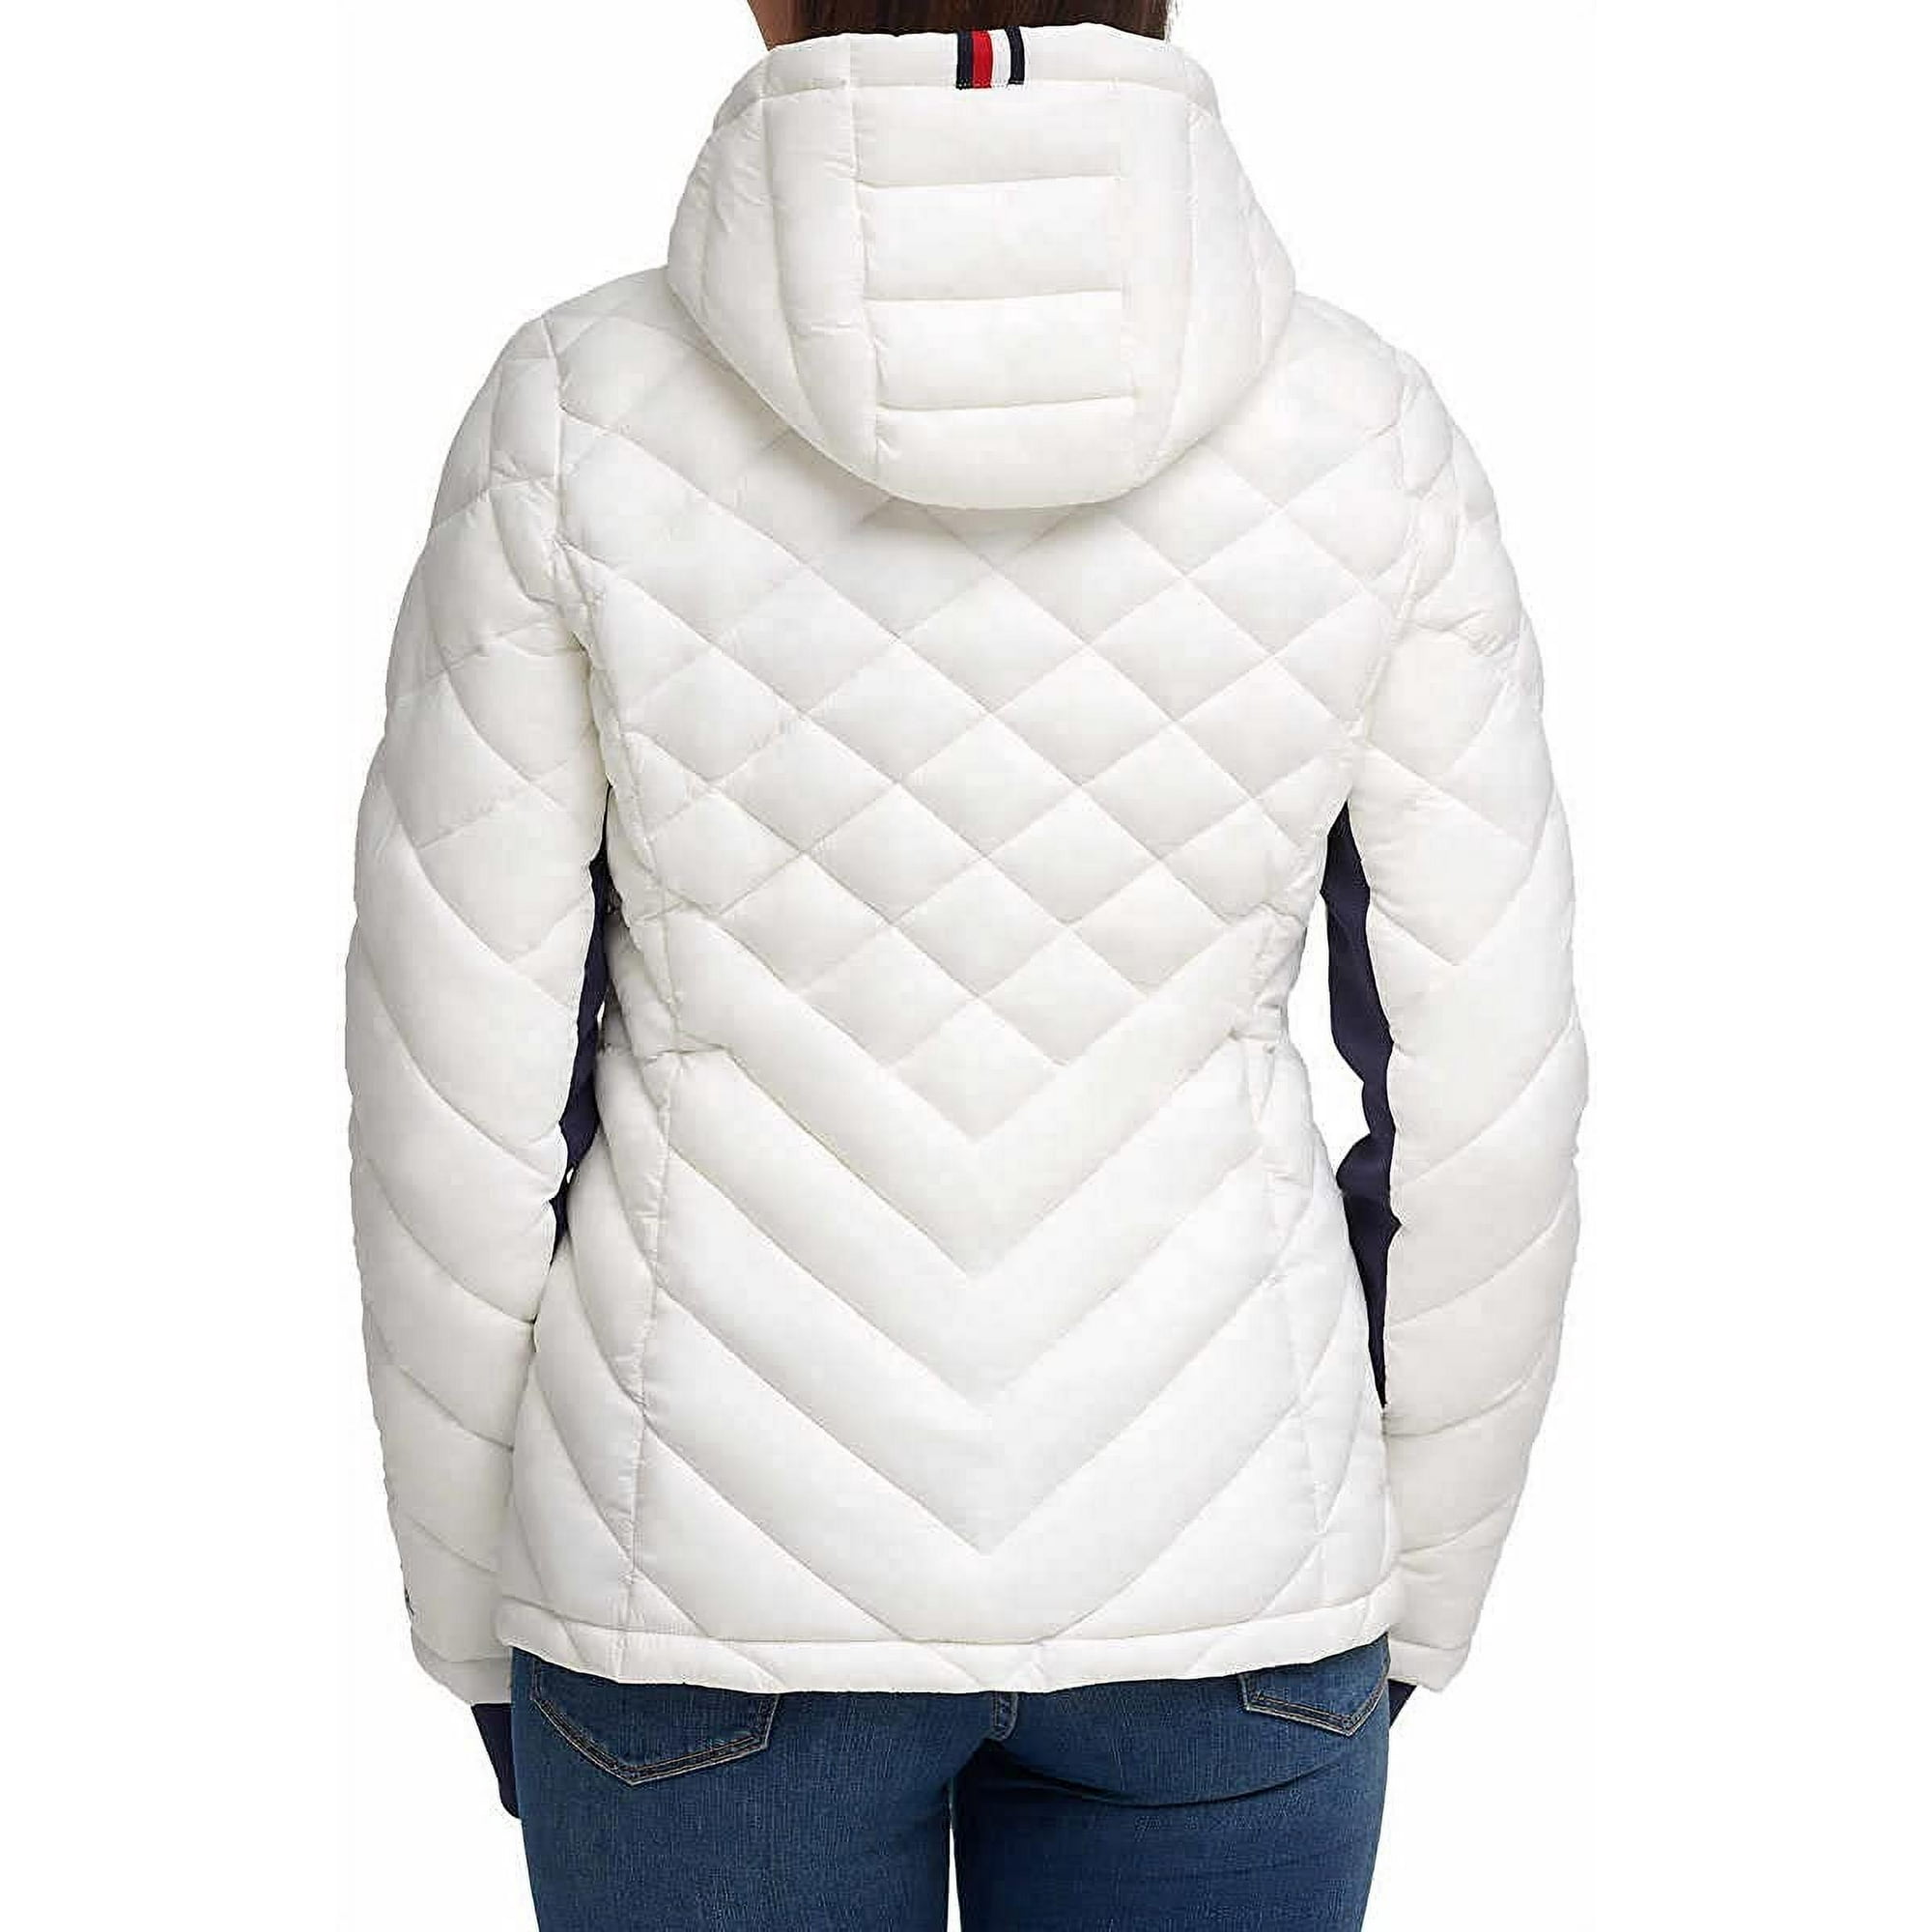 Tommy Hilfiger Womens Hooded Jacket(White,XL) - Walmart.com